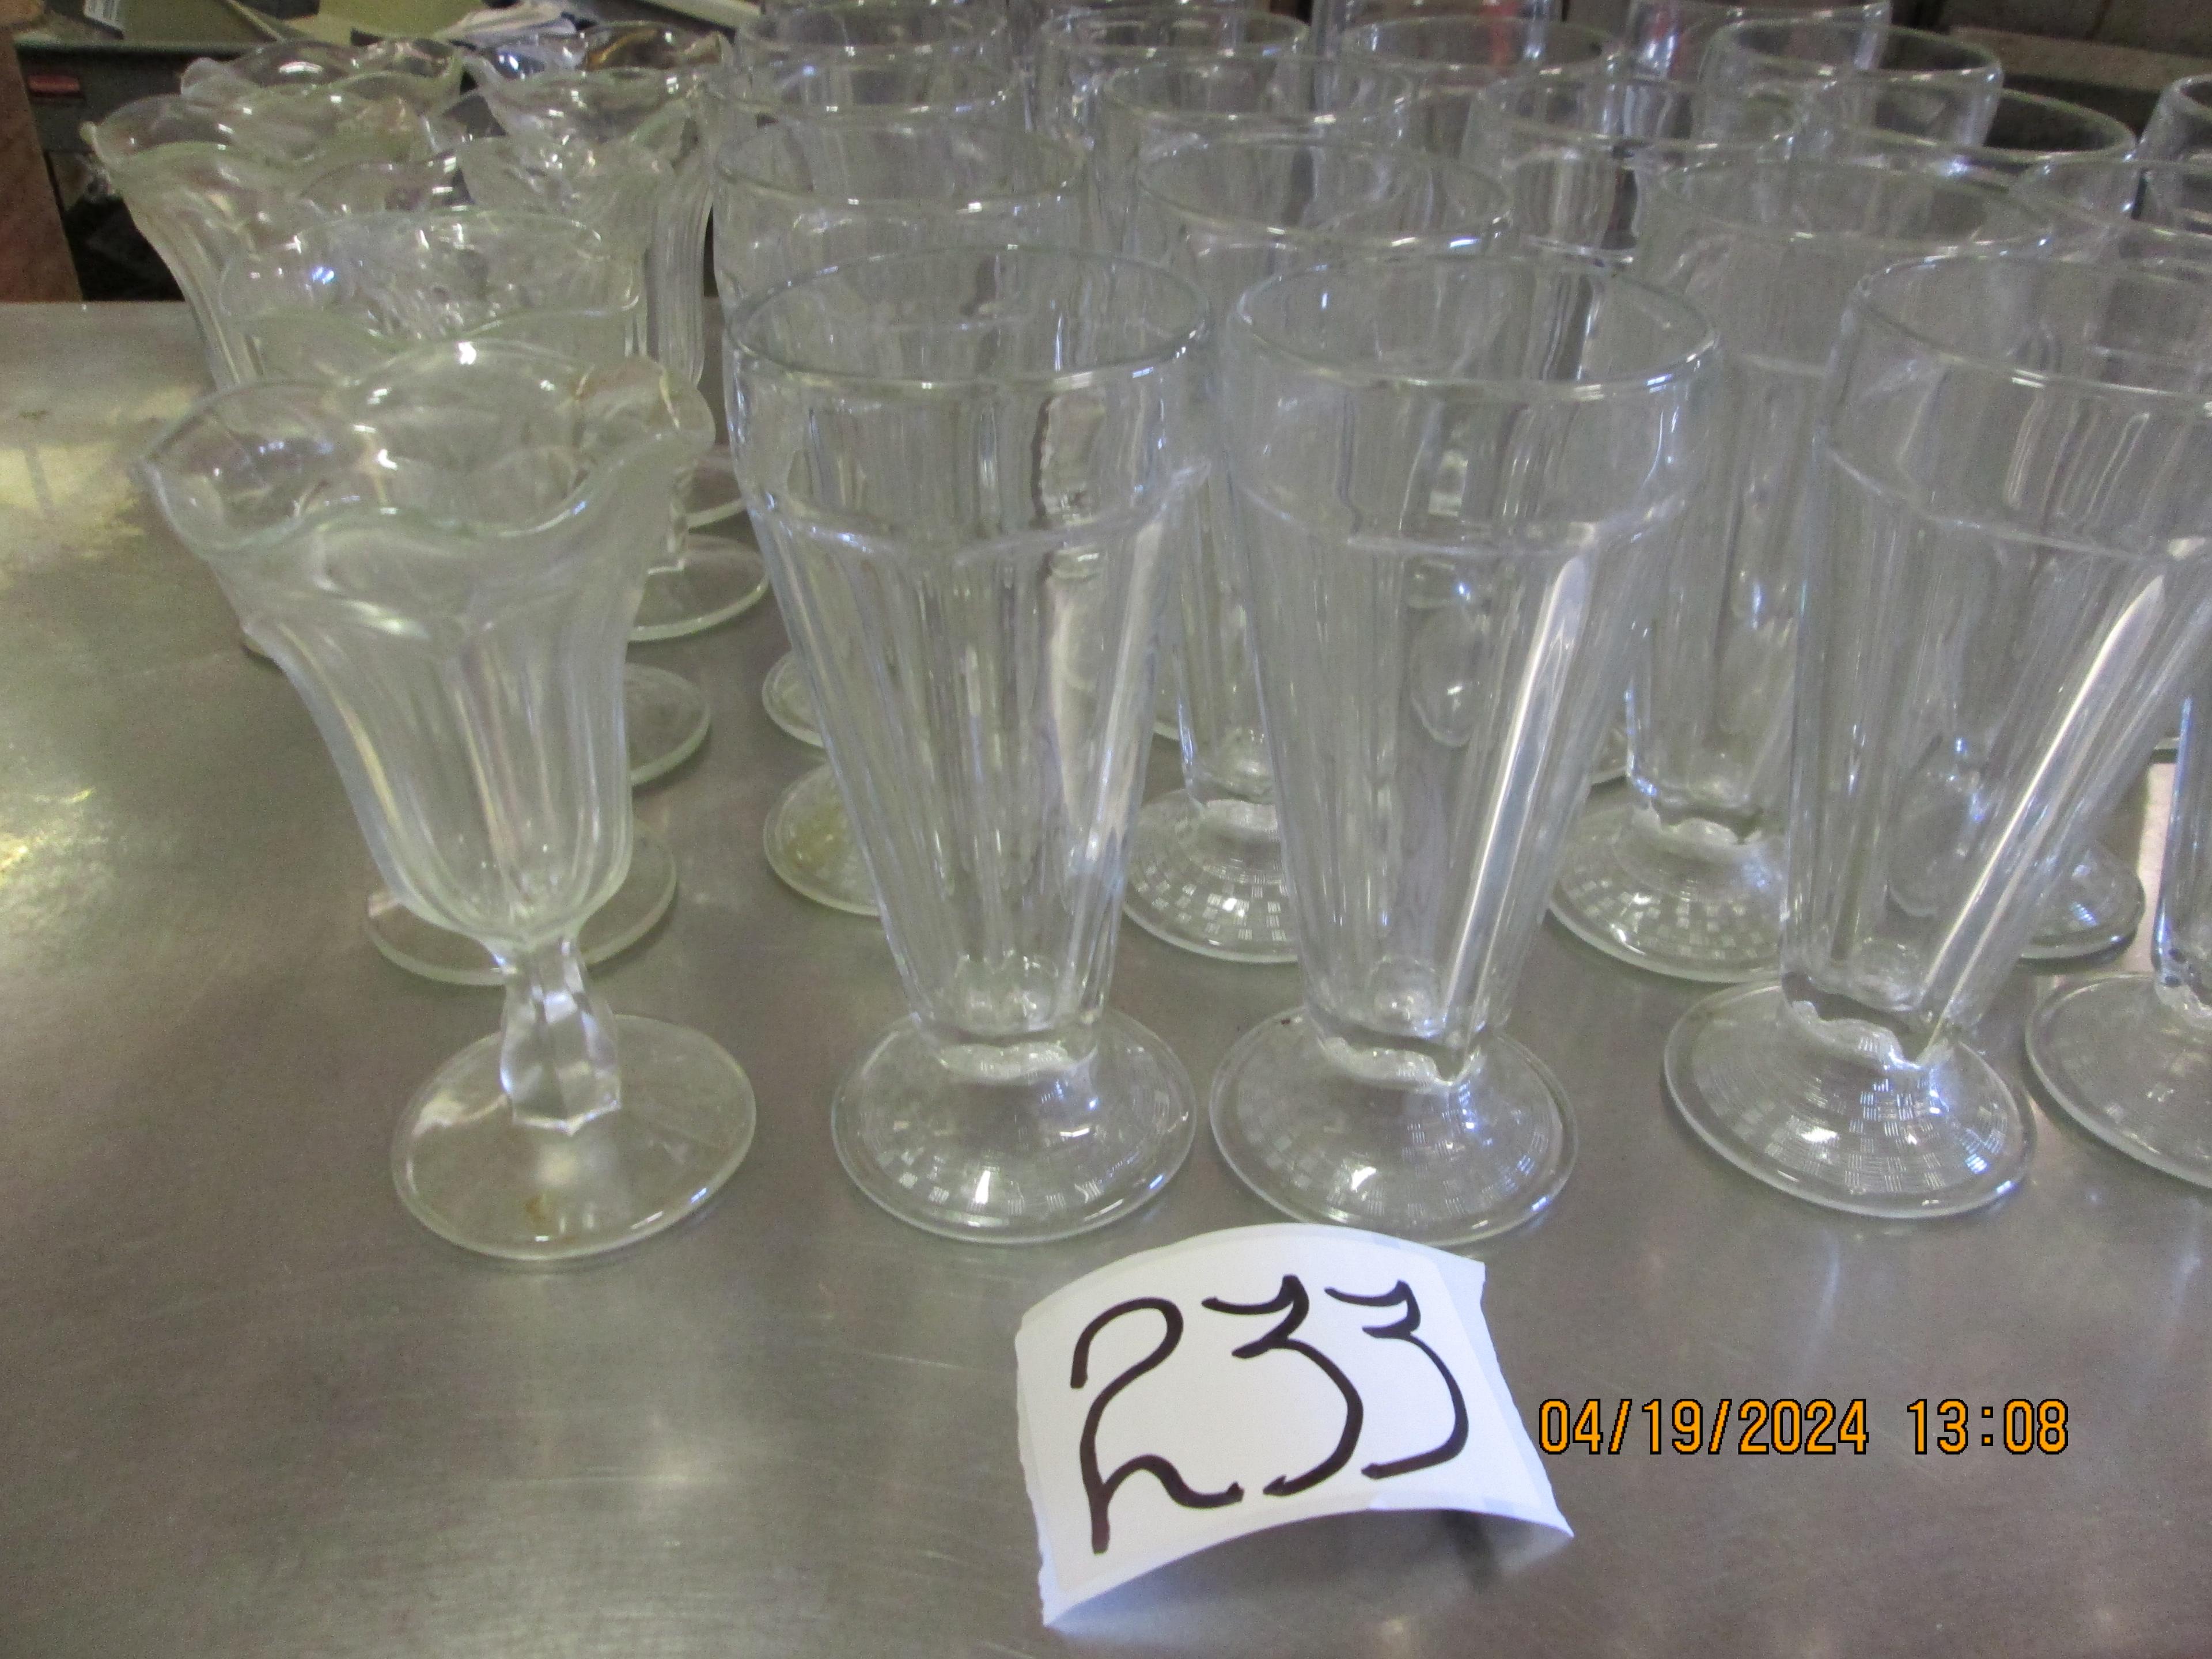 30 assorted malt glasses